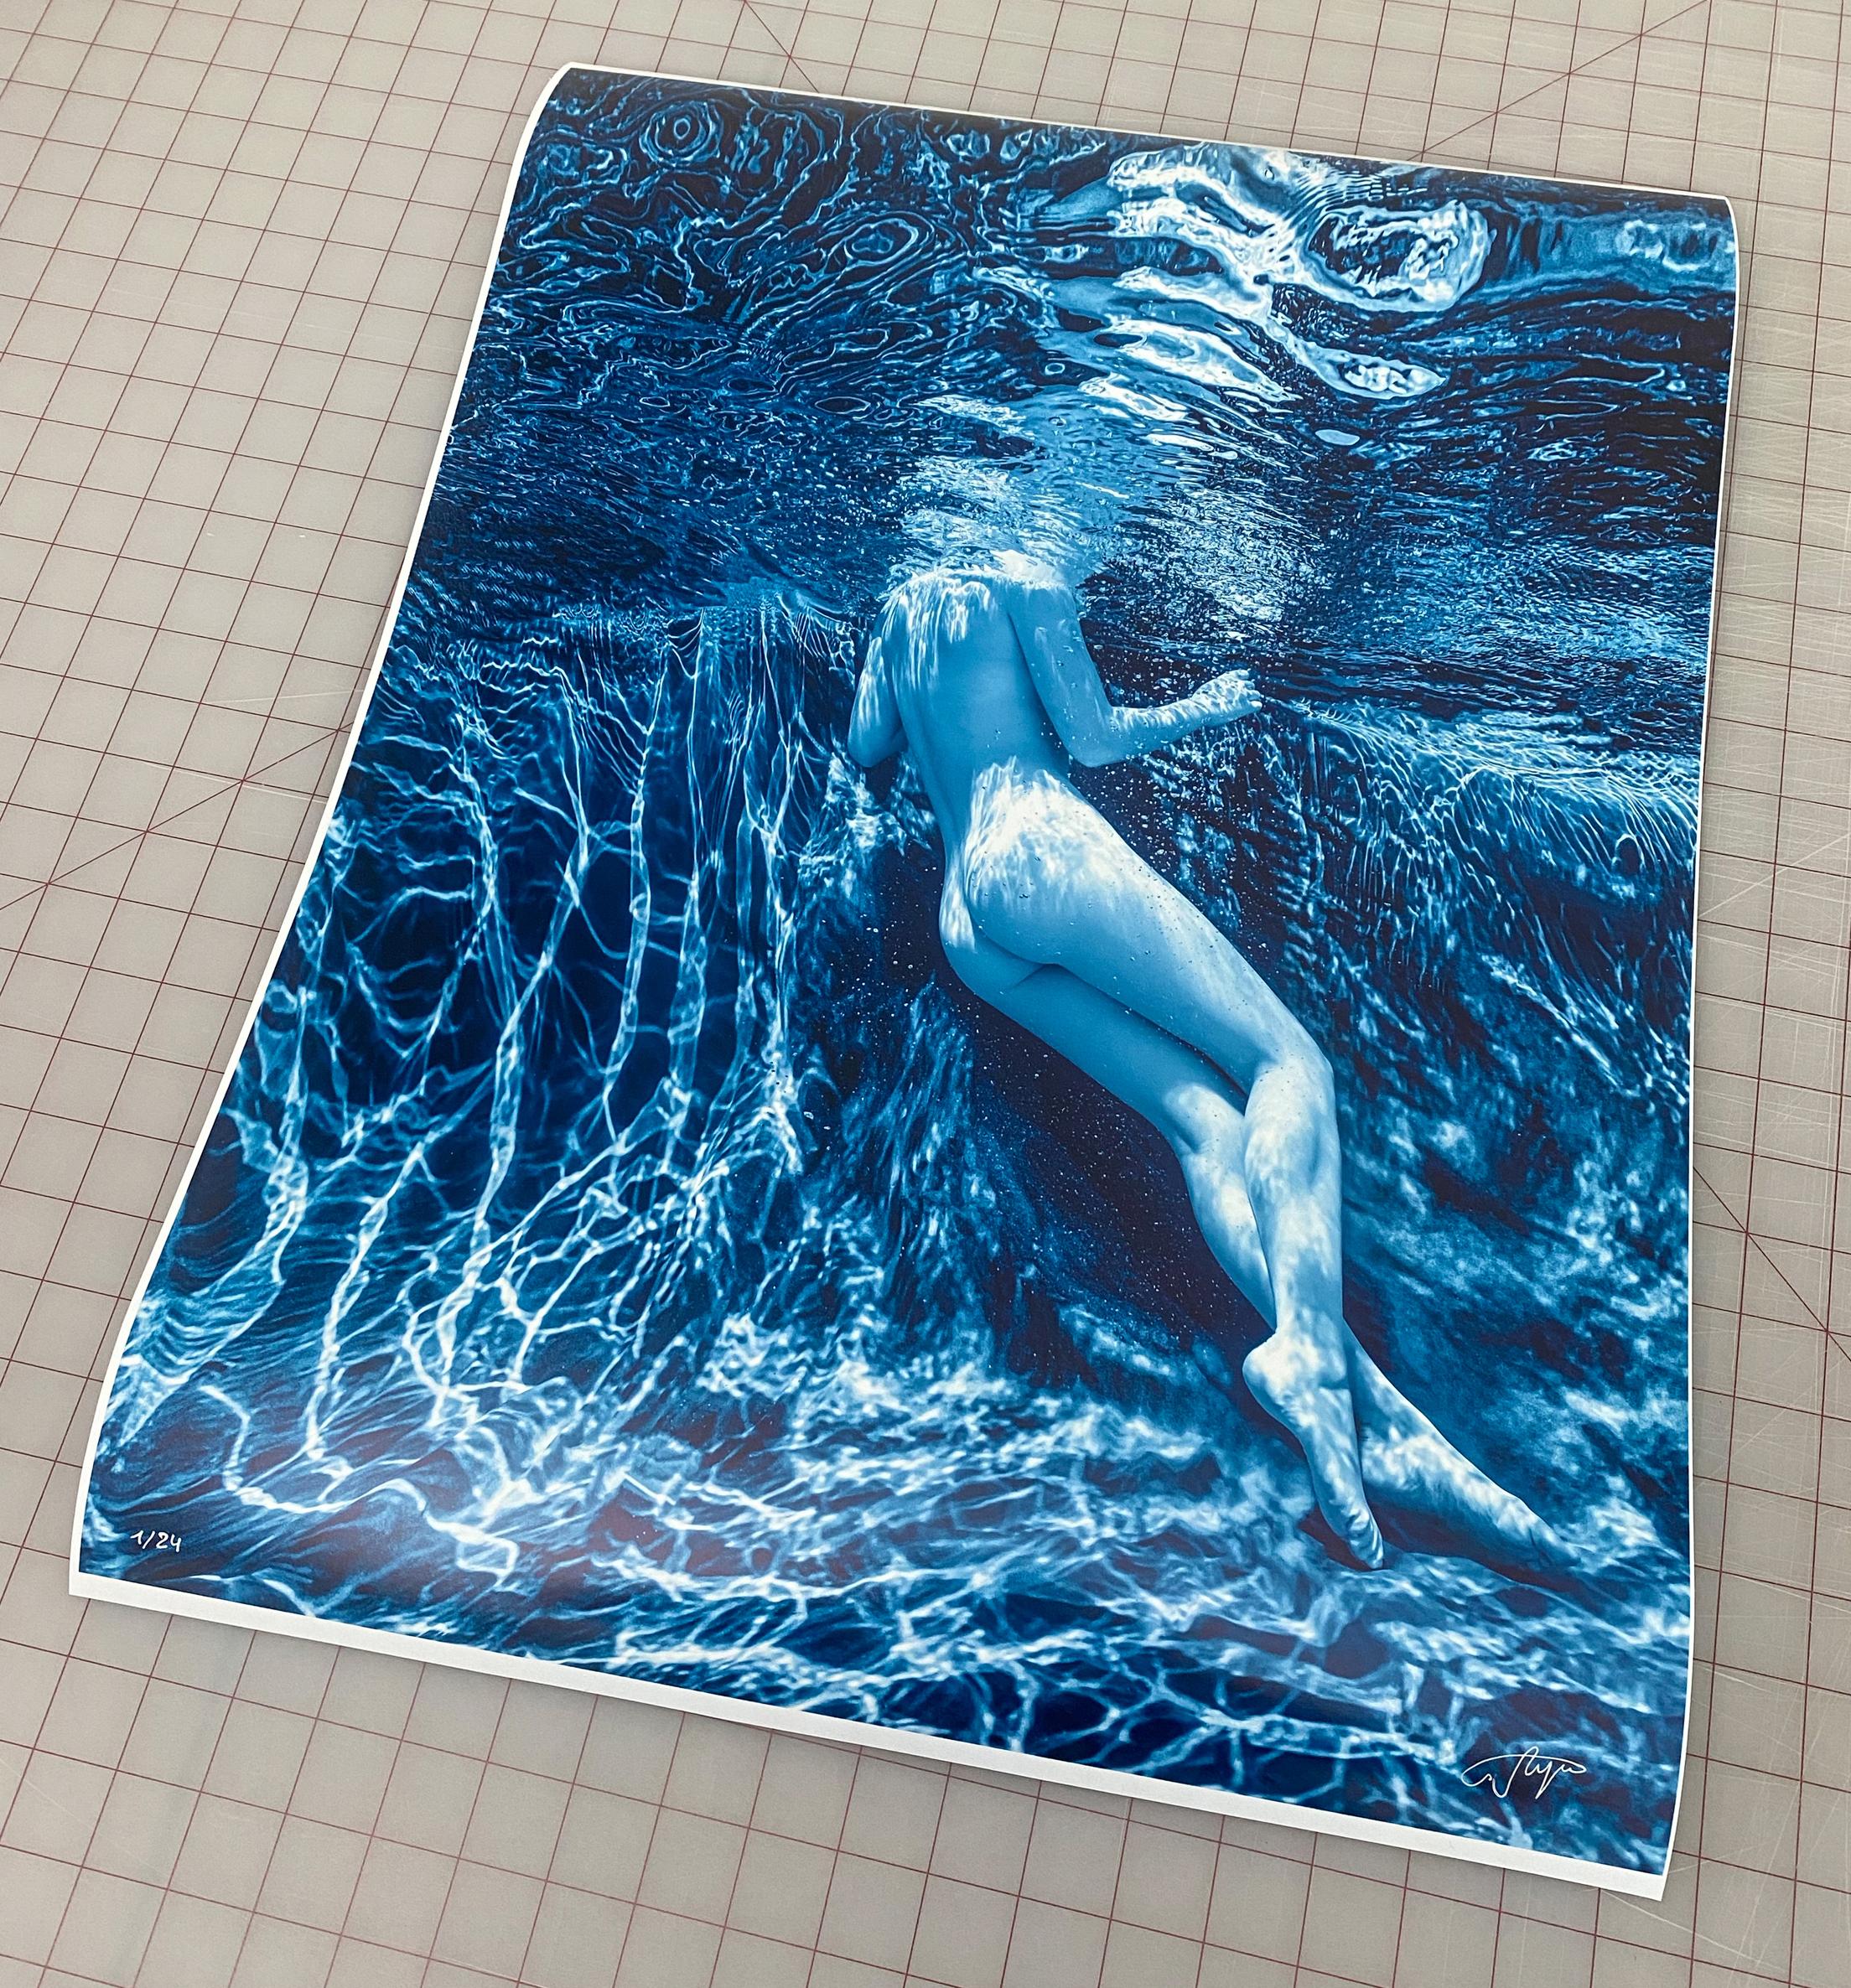 Moonlight IV - underwater nude photograph - archival pigment print 56x43